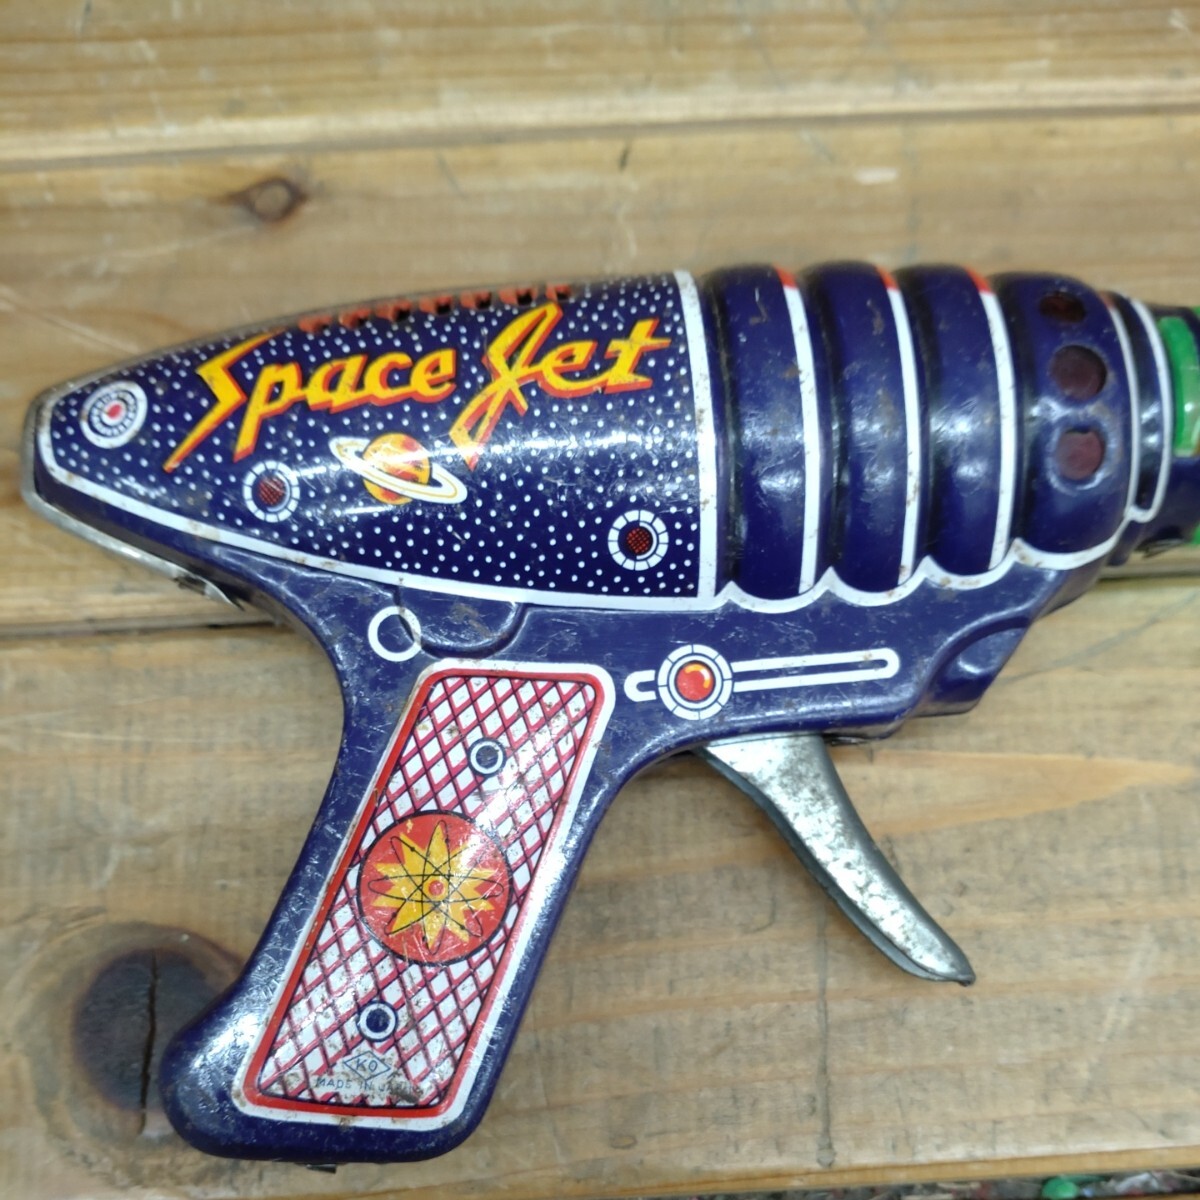  Showa Retro жестяная пластина производства 70s 70 годы . магазин KO Space jet gun Space Jet Gun космос ружье жестяная пластина. металлический . Vintage игрушка подлинная вещь 